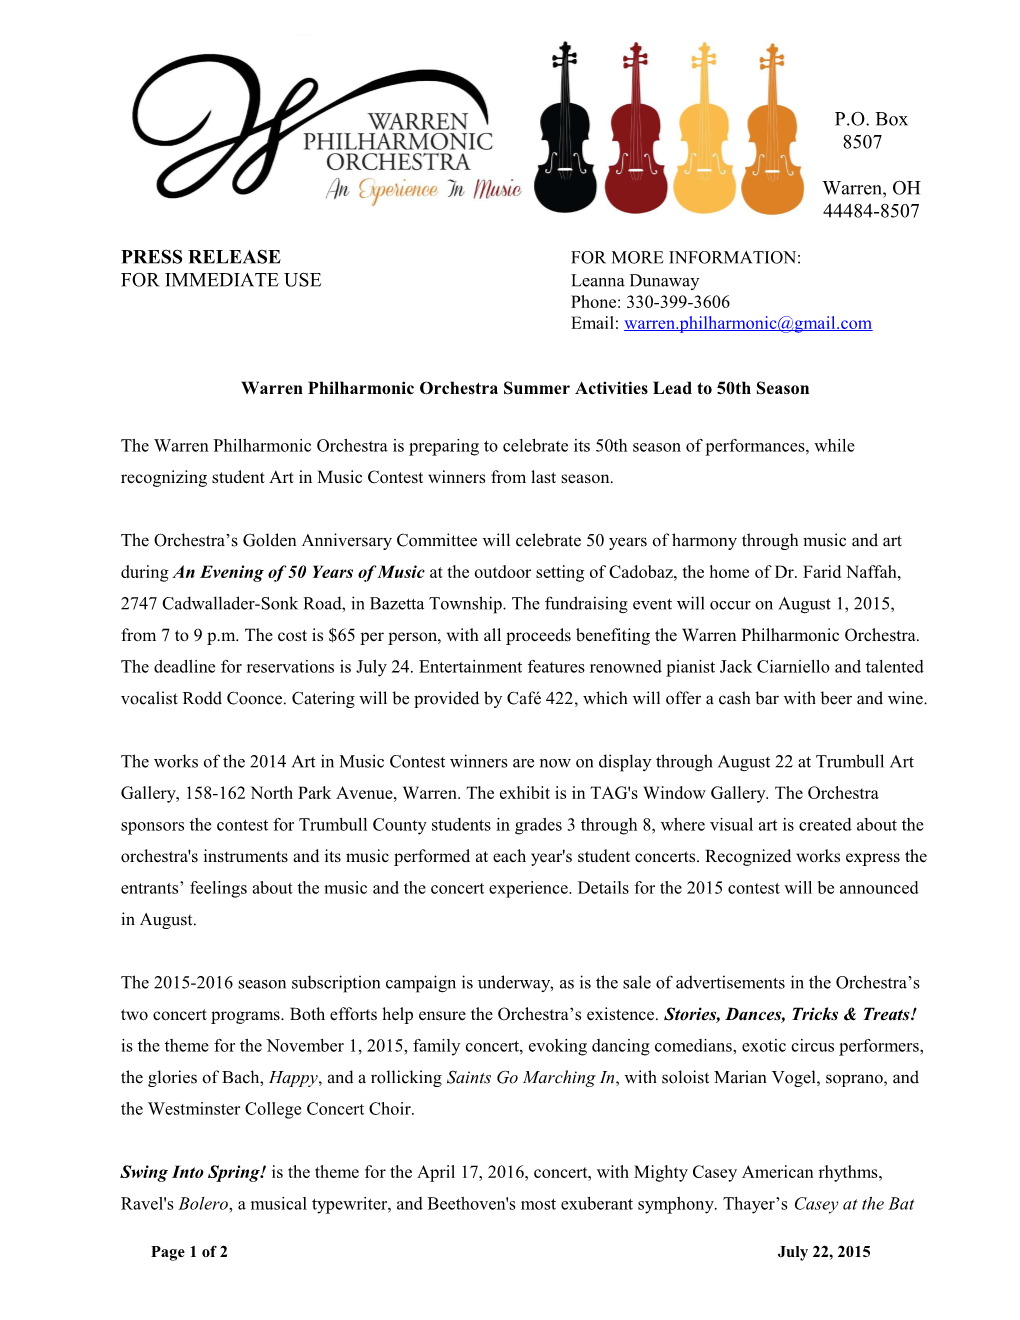 WPO Press Release: Warren Philharmonic Orchestra Summer Activities Lead to 50Th Season